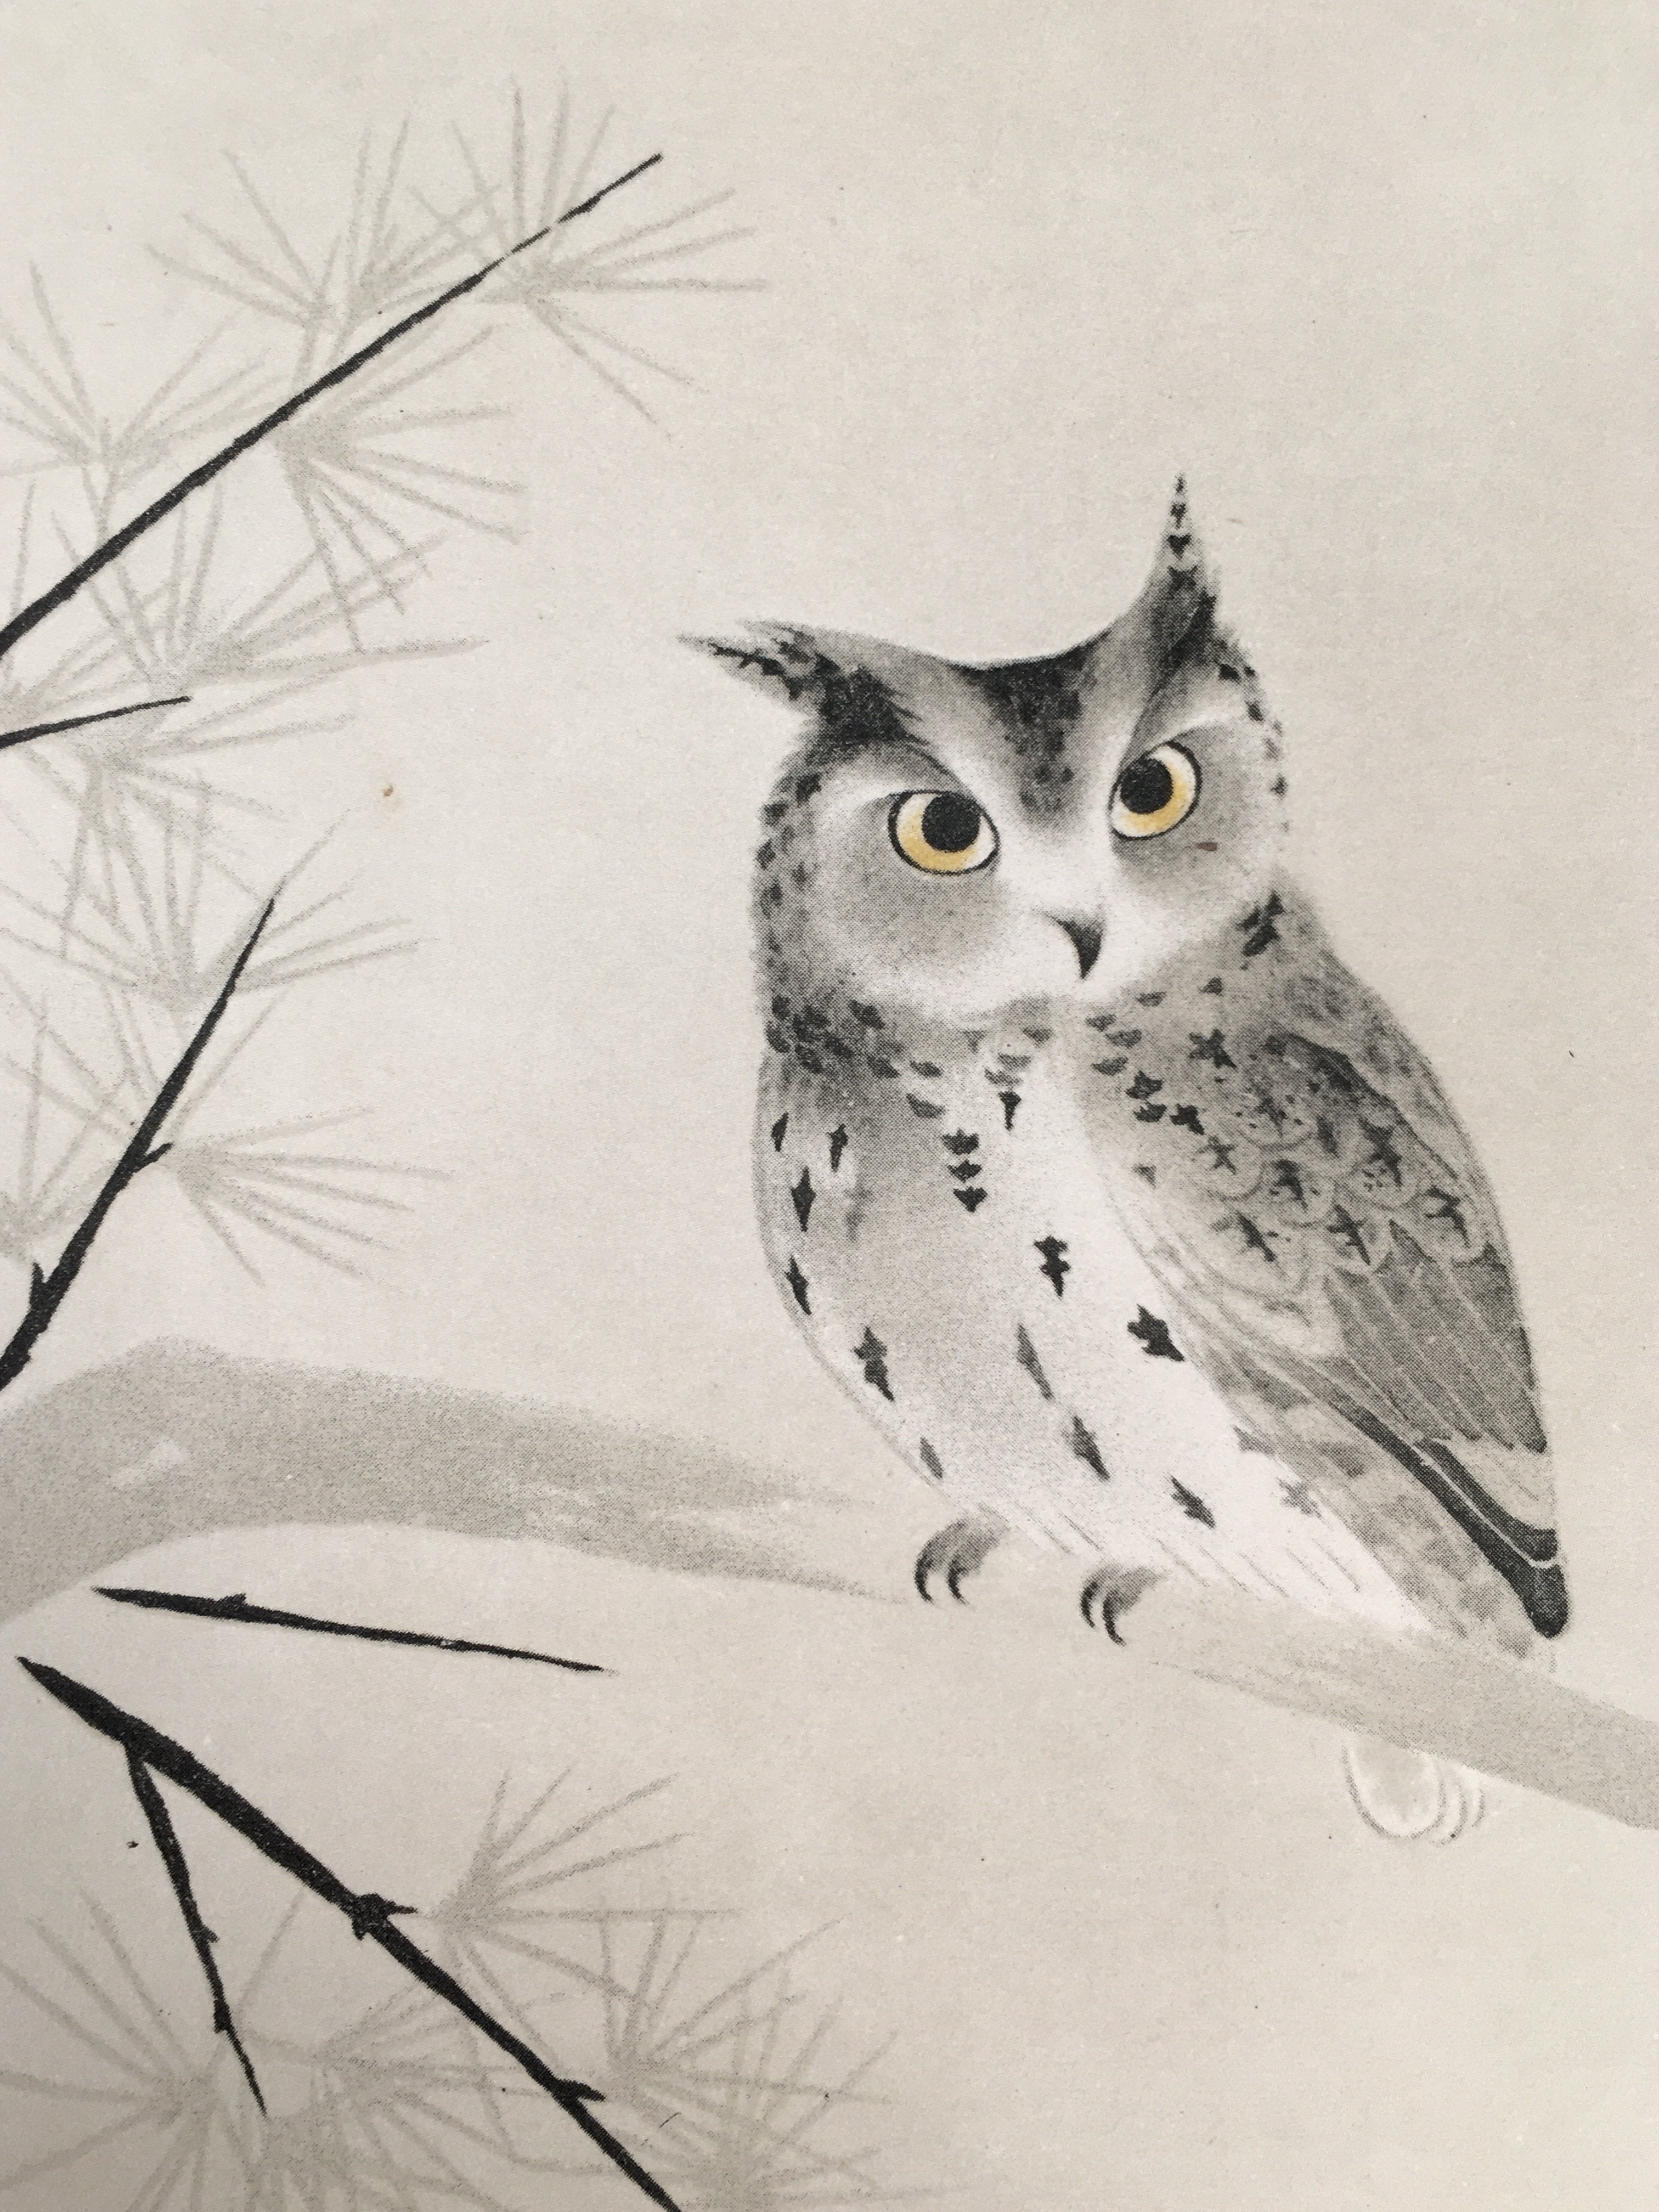 Japanese Print Drawing Painting Vtg Owl Bird Lucky Charm Pine Tree P290